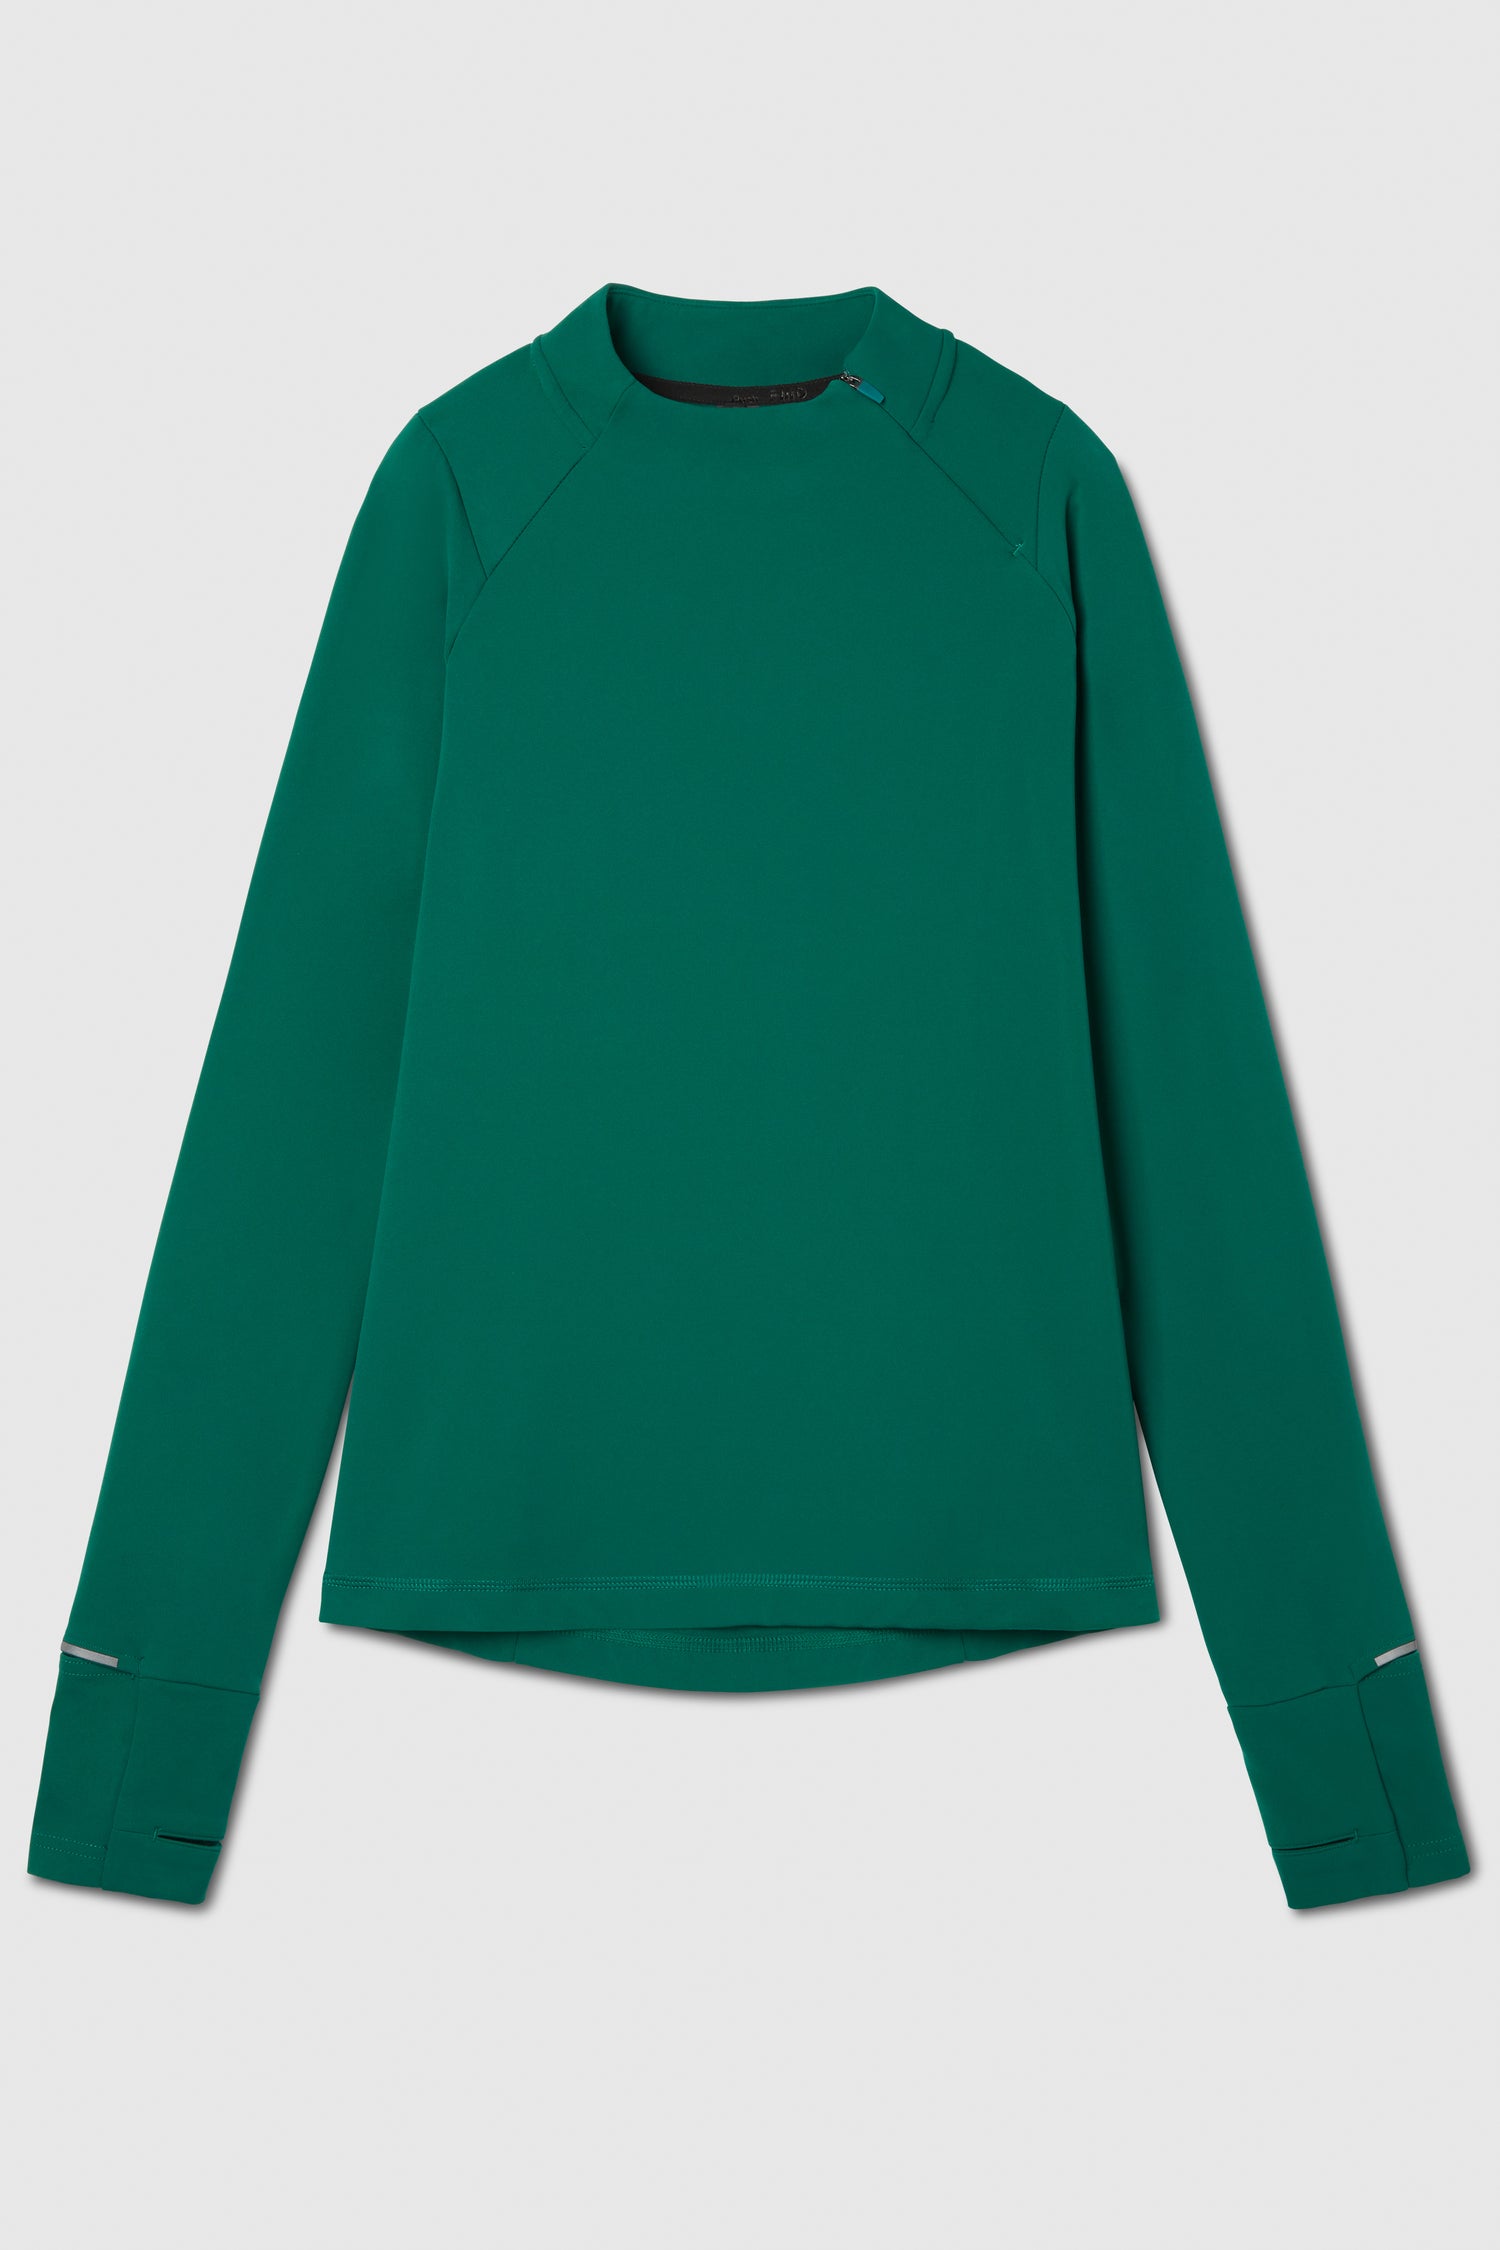 Tangerine Activewear Green Full Zip Mesh Long Sleeve Thumbholes Size XL